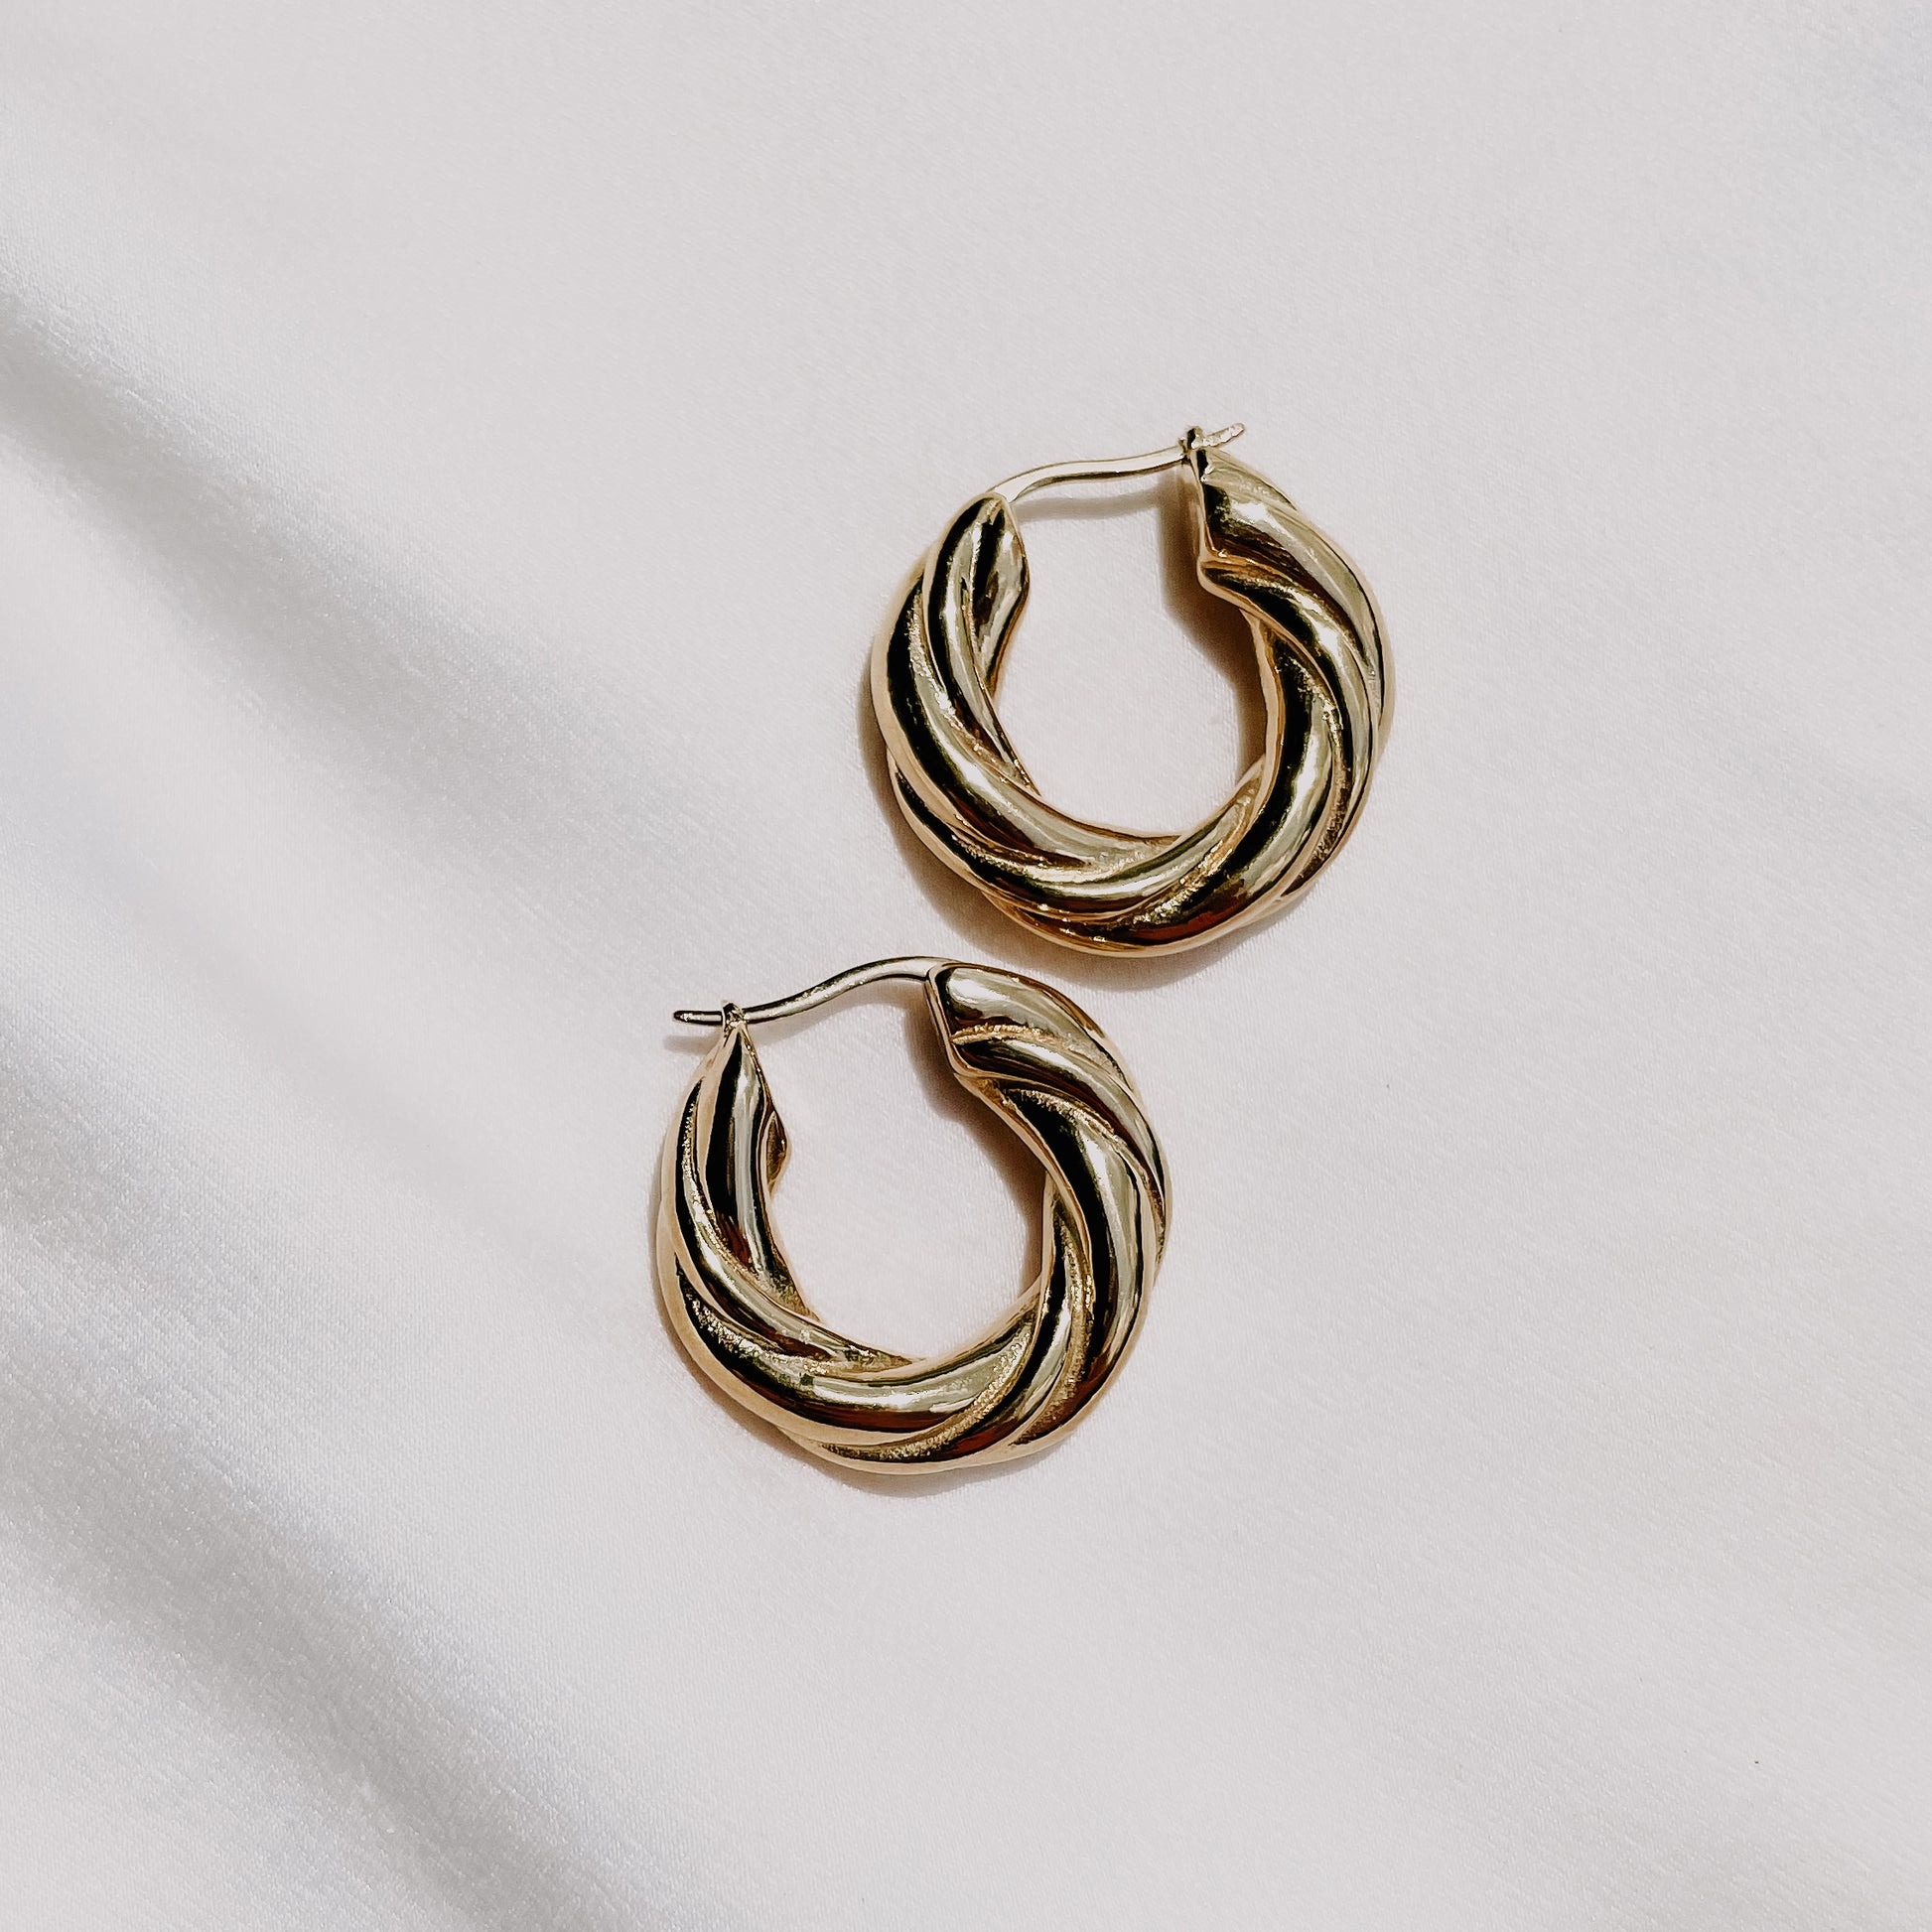 Already Shipped-open Silver Hoop Earrings 3.5 Cm Special Price 